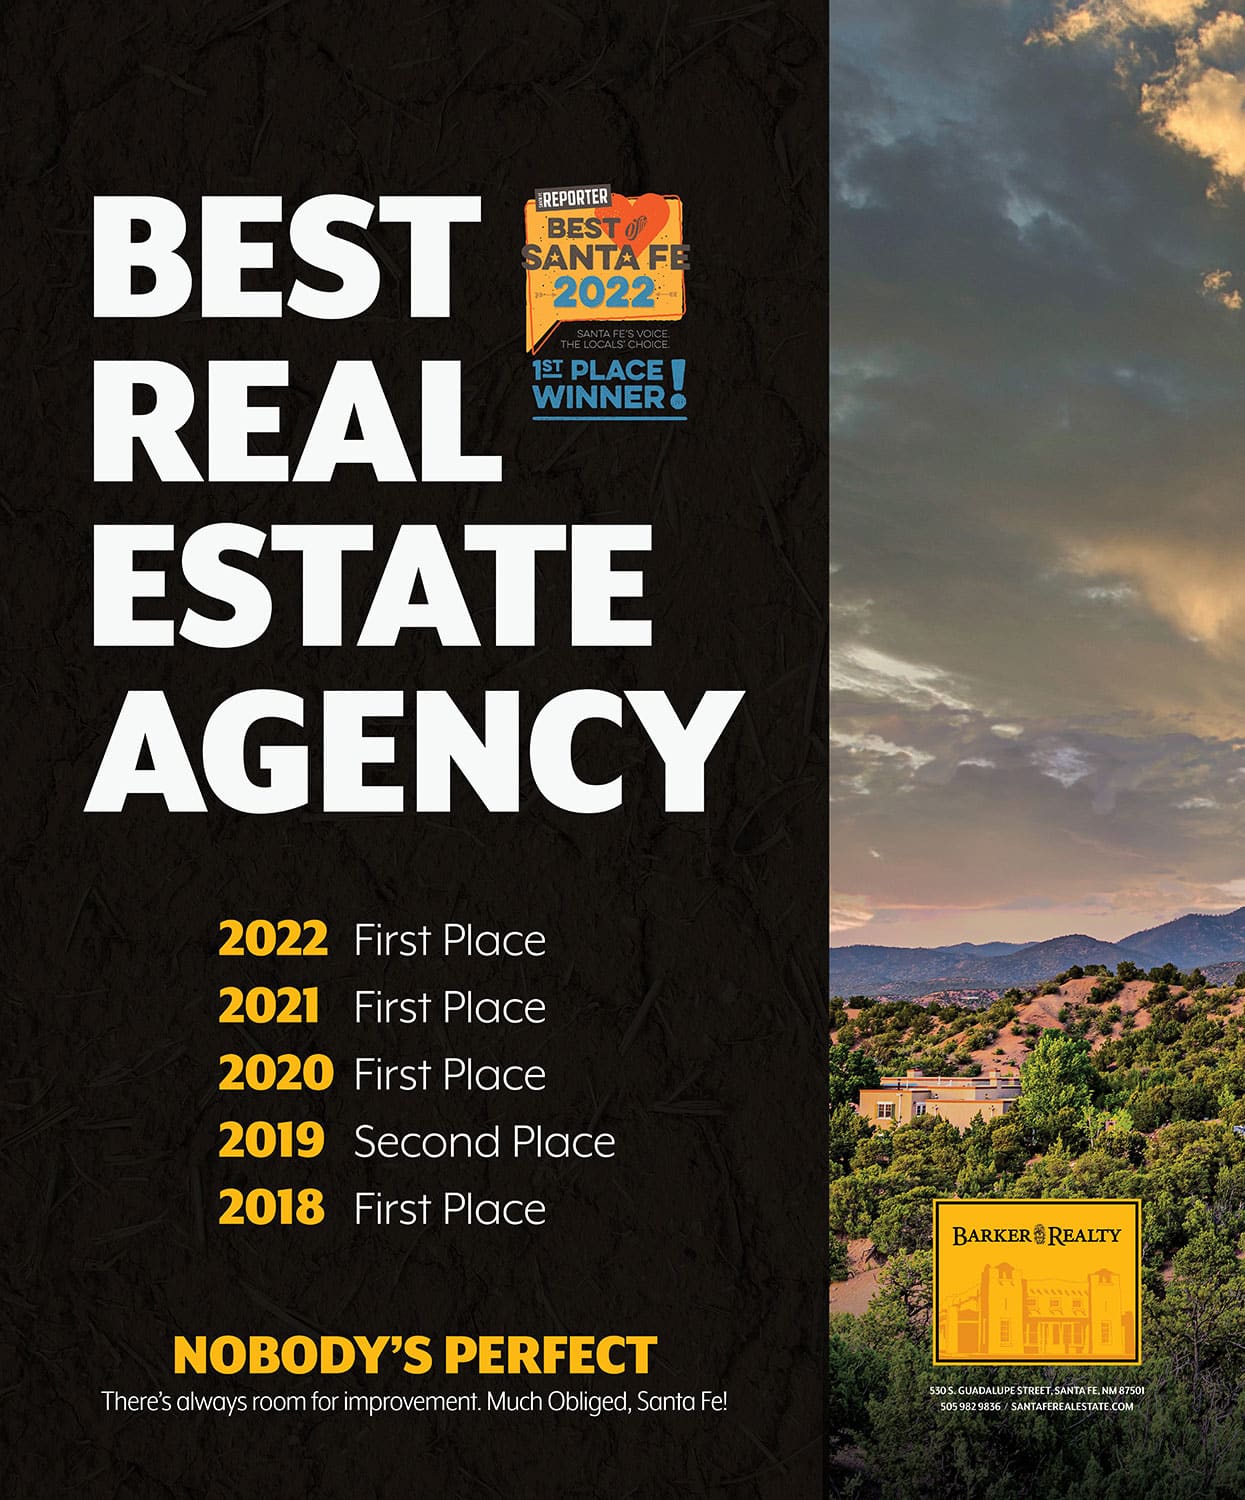 Best Real Estate Agency advertisement